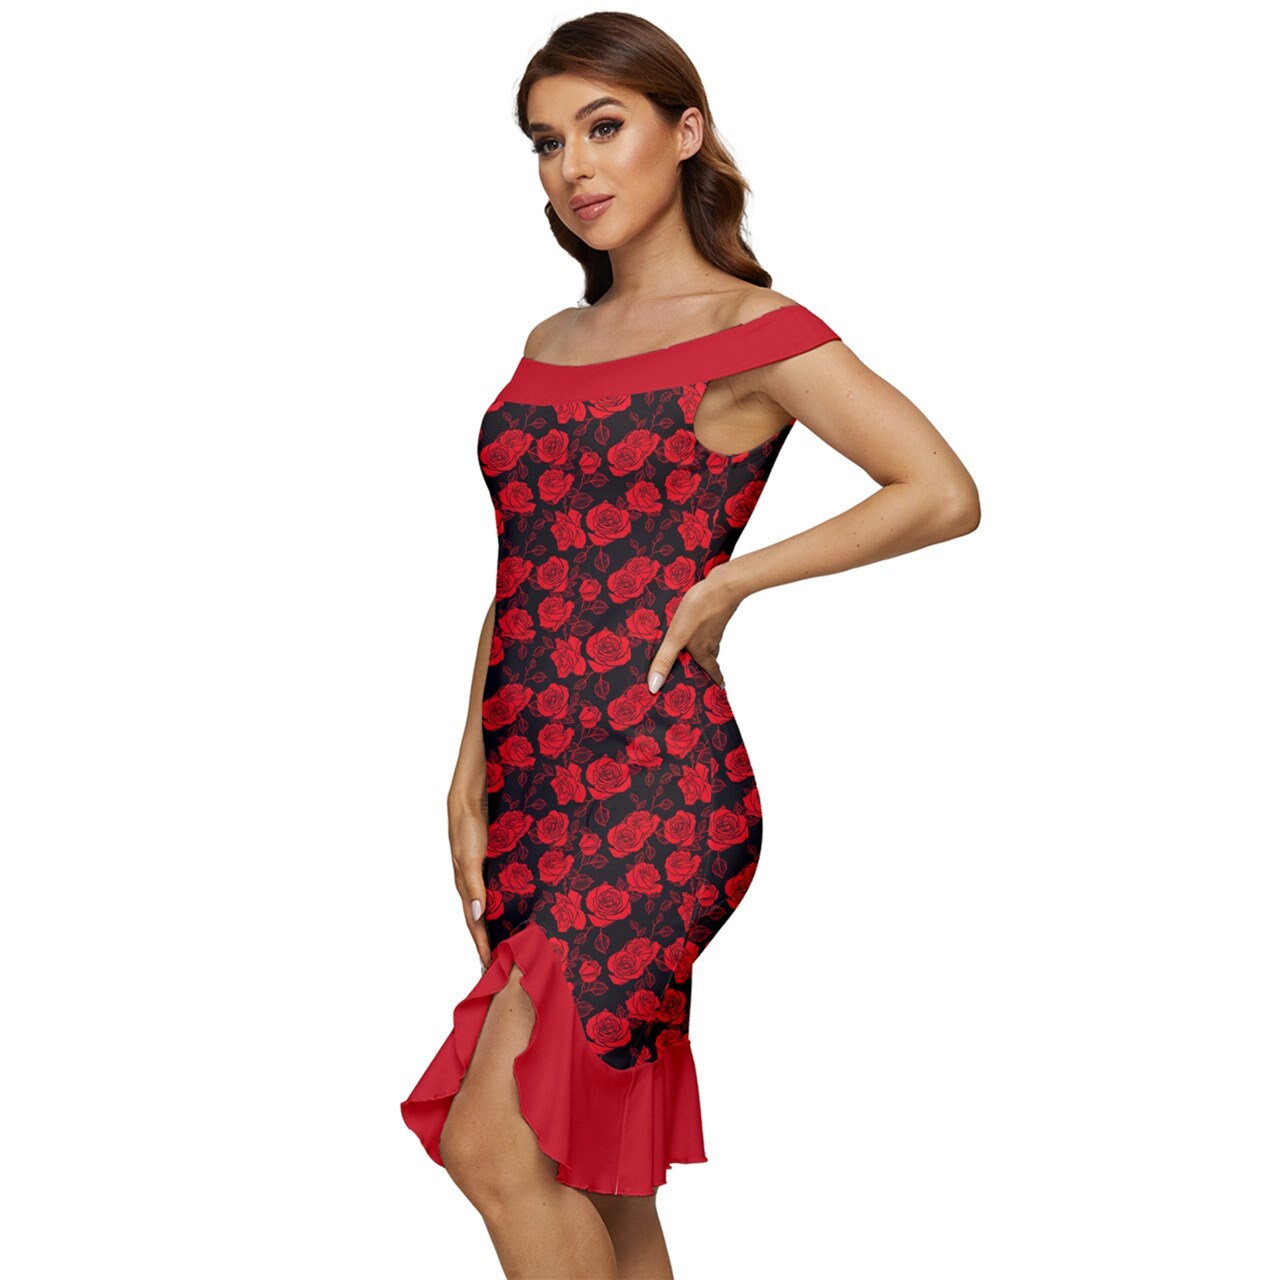 Pin up Dress, Red Sheath Dress, Retro 40s Dress Style, Women's sheath dress, Floral Dress, Sexy Dress, Off shoulder dress, Red Rose Dress